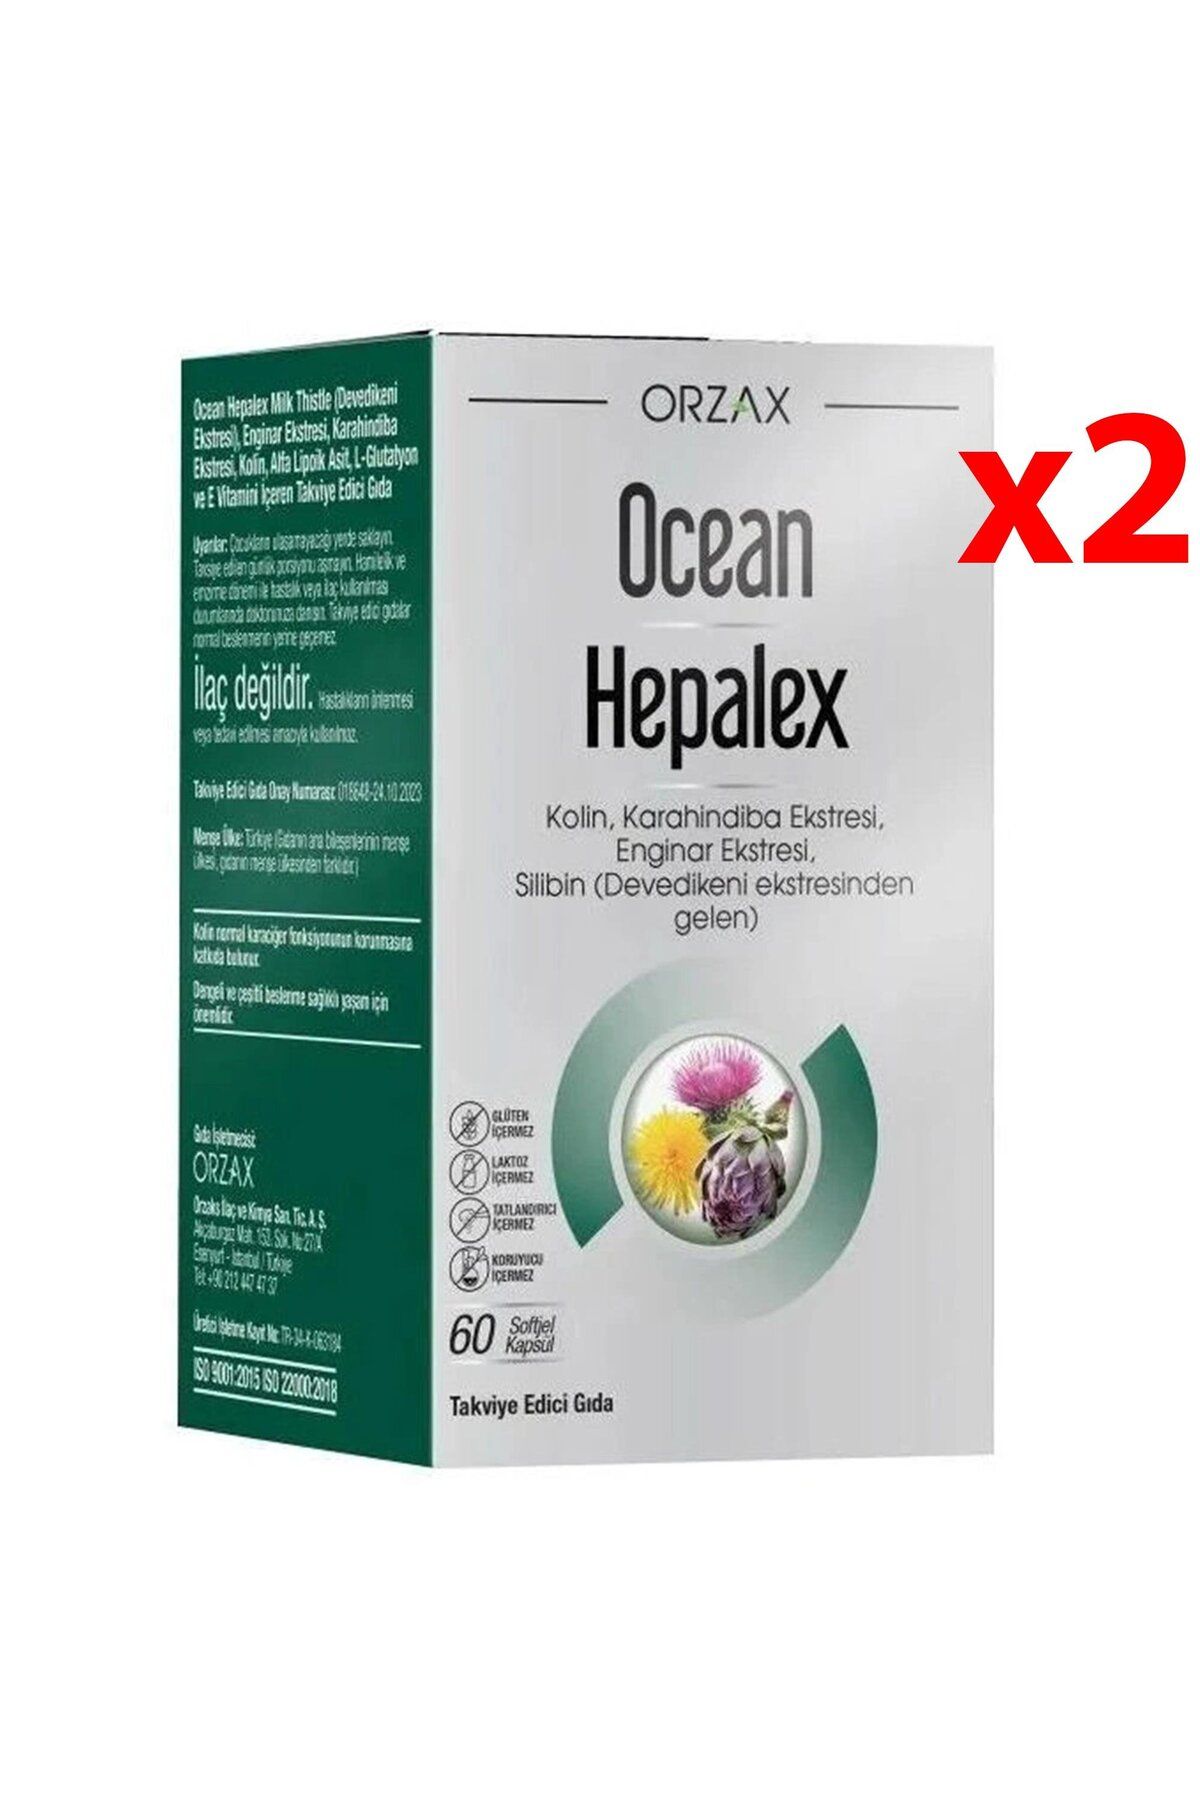 Orzax Ocean Hepalex 60 Softgel Kapsül - 2 Adet